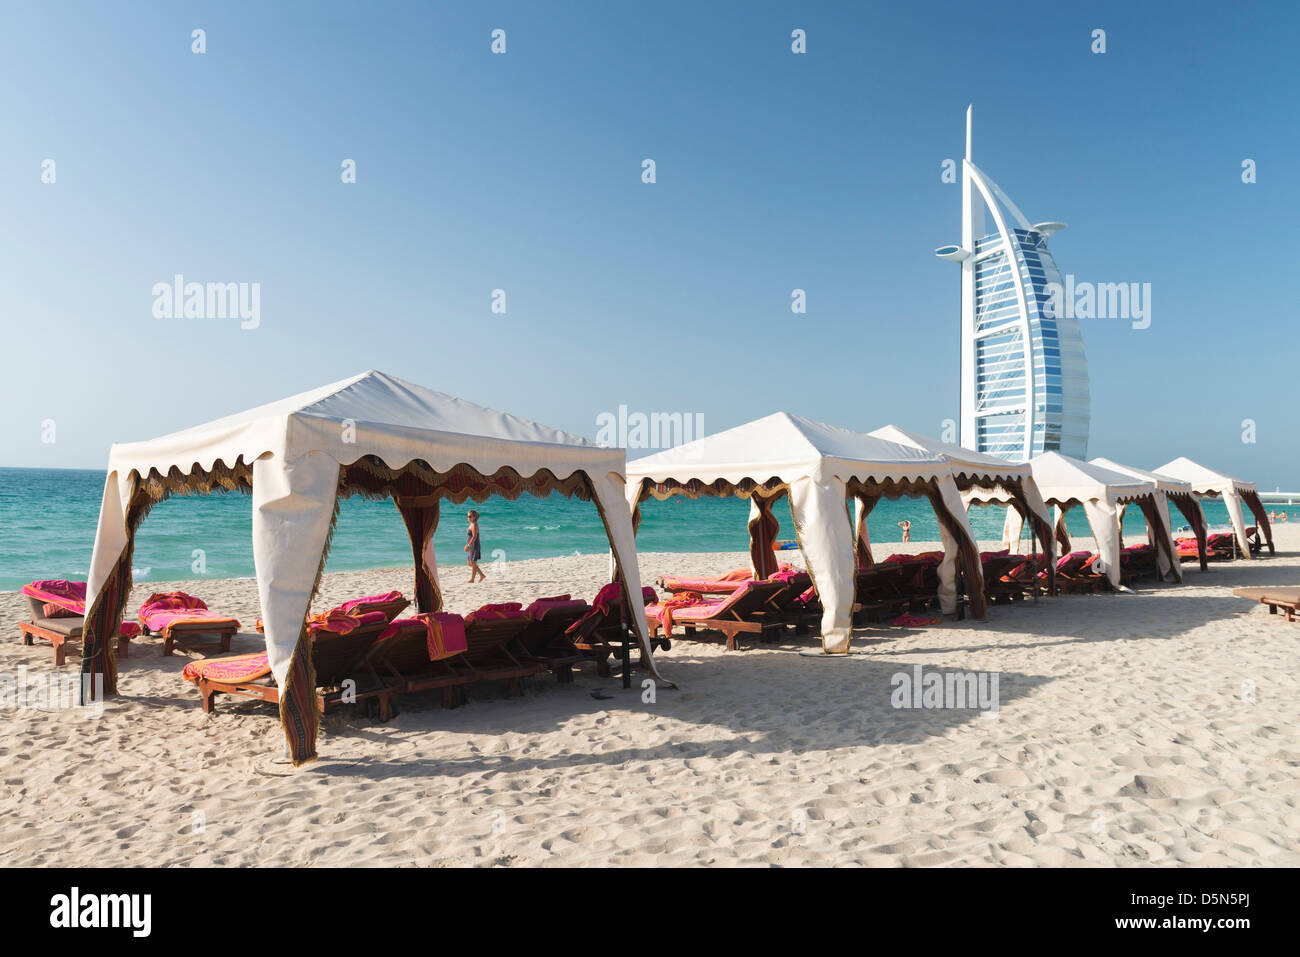 Beach resort beside Burj Al Arab luxury hotel in Dubai United Arab Emirates Stock Photo